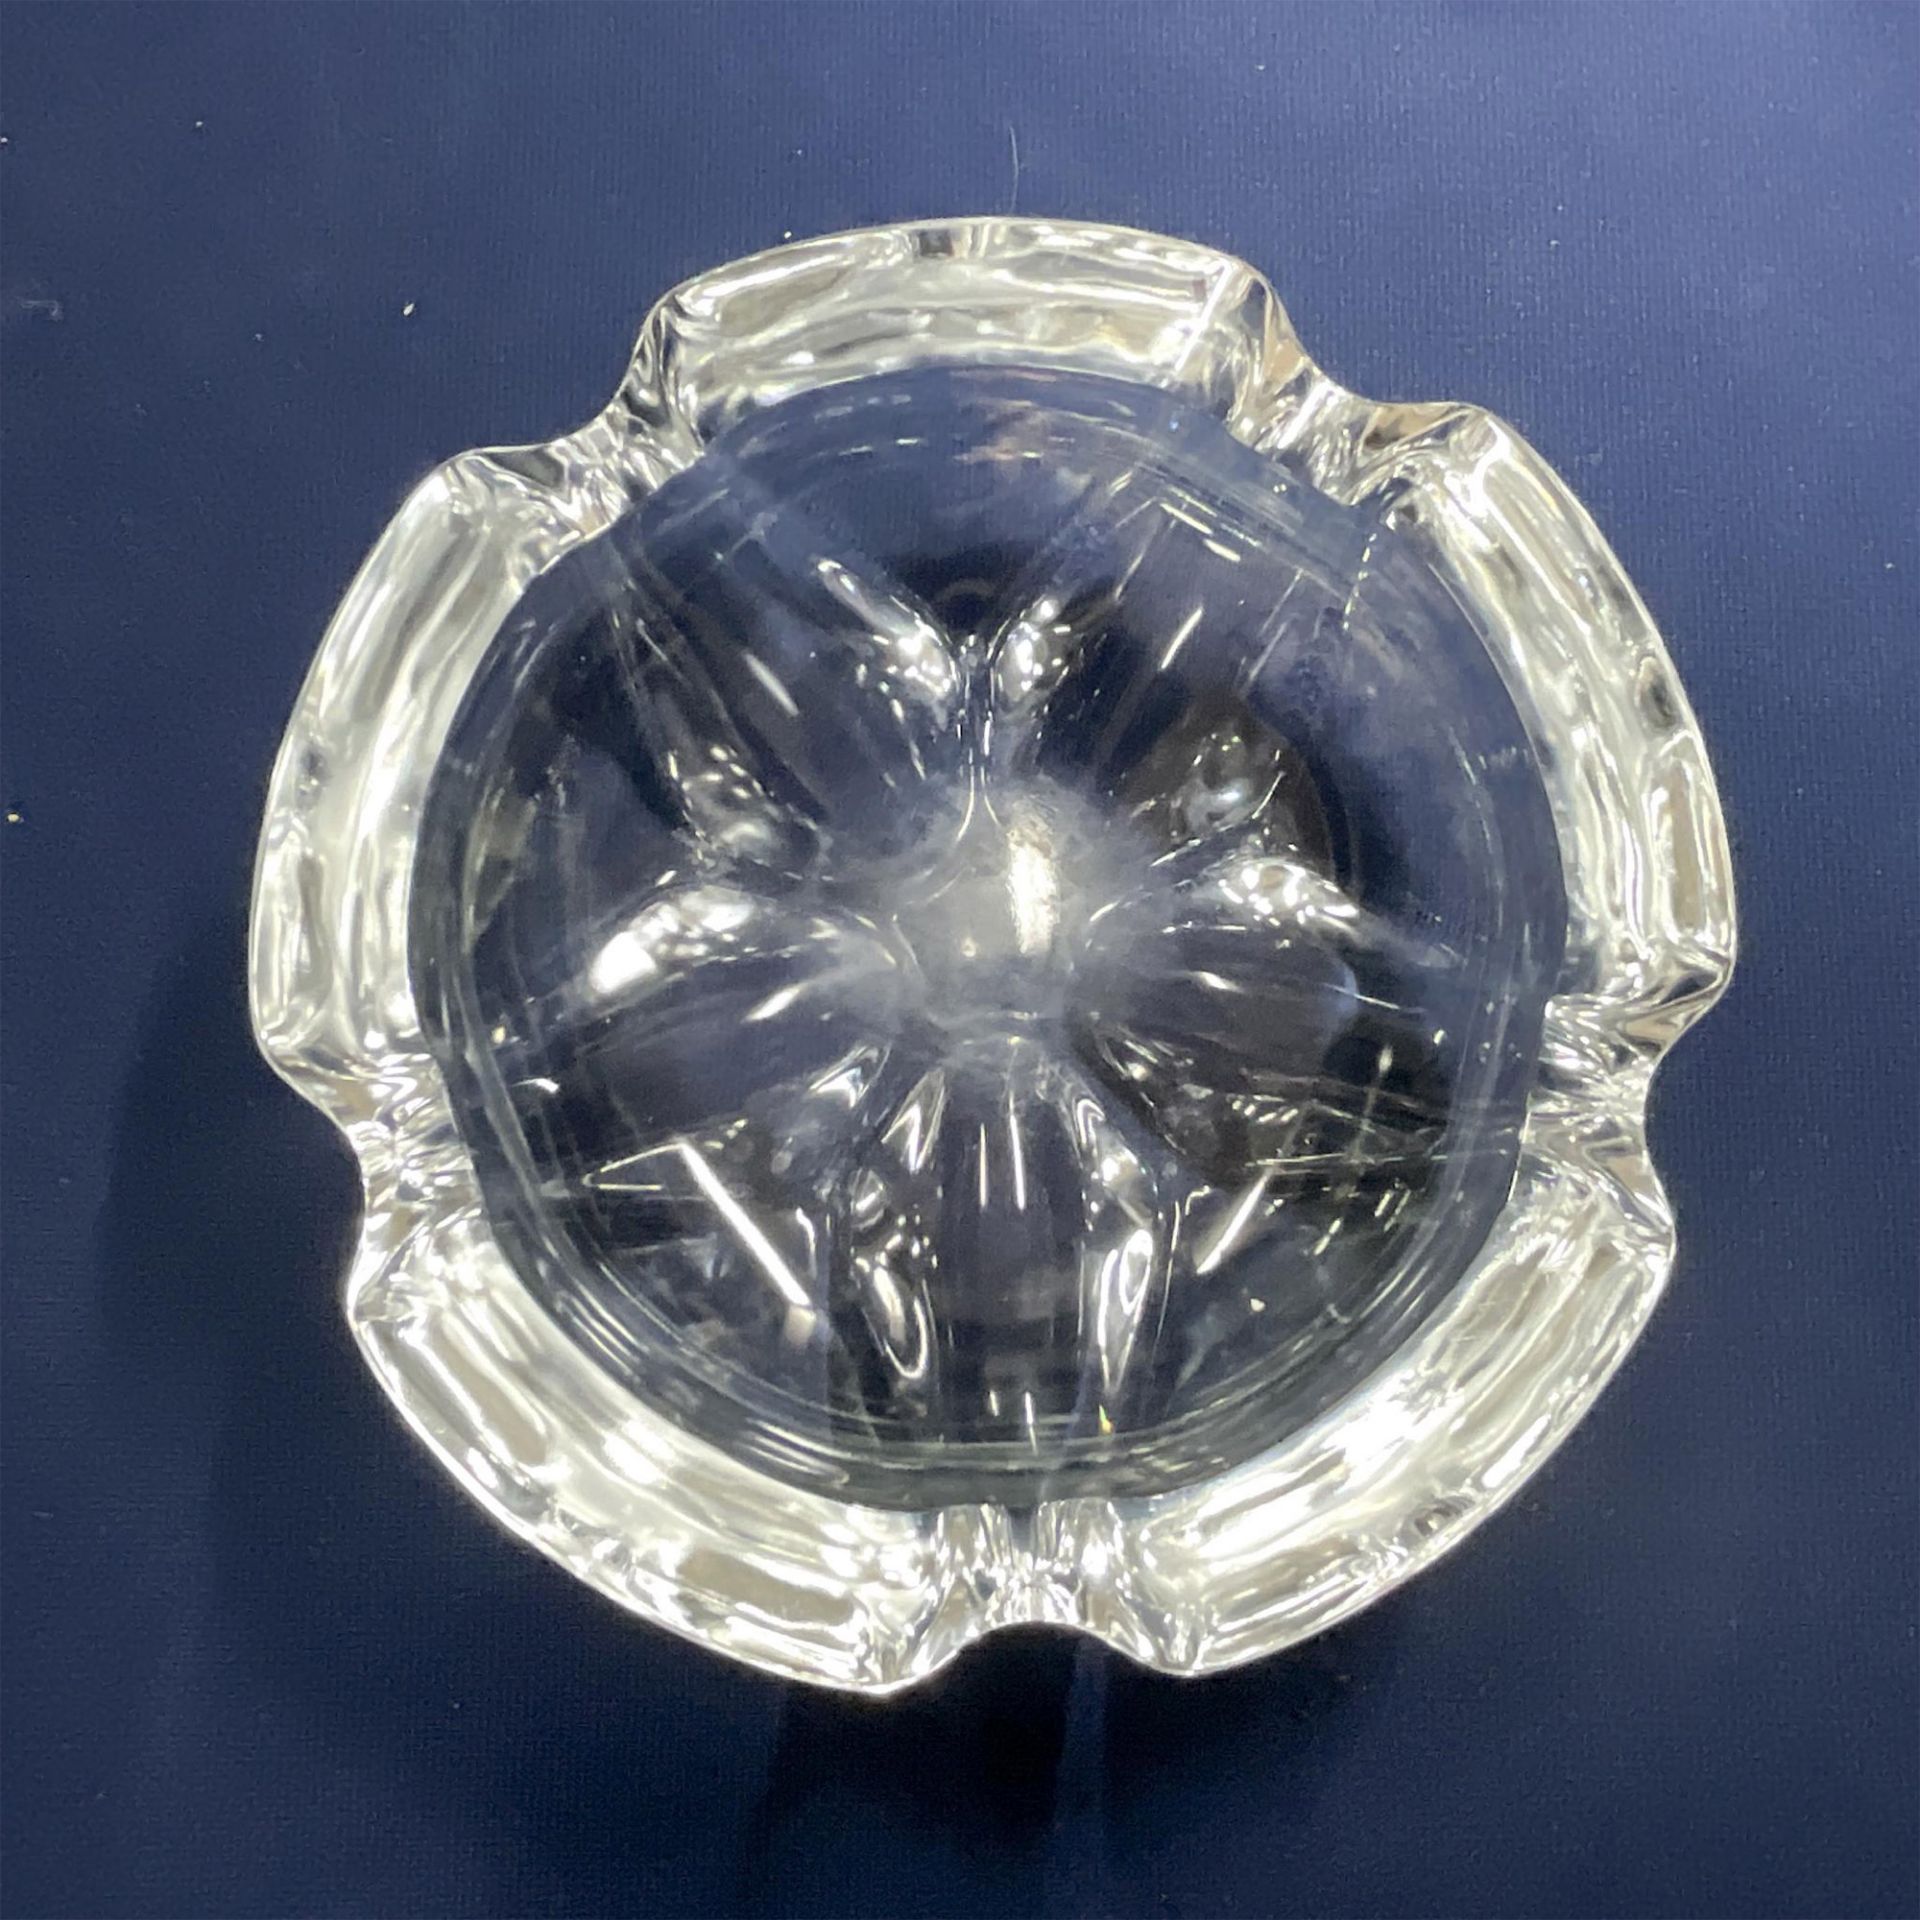 2pc Decorative Glass Objects, Ashtray & Ornamental Egg - Image 4 of 4